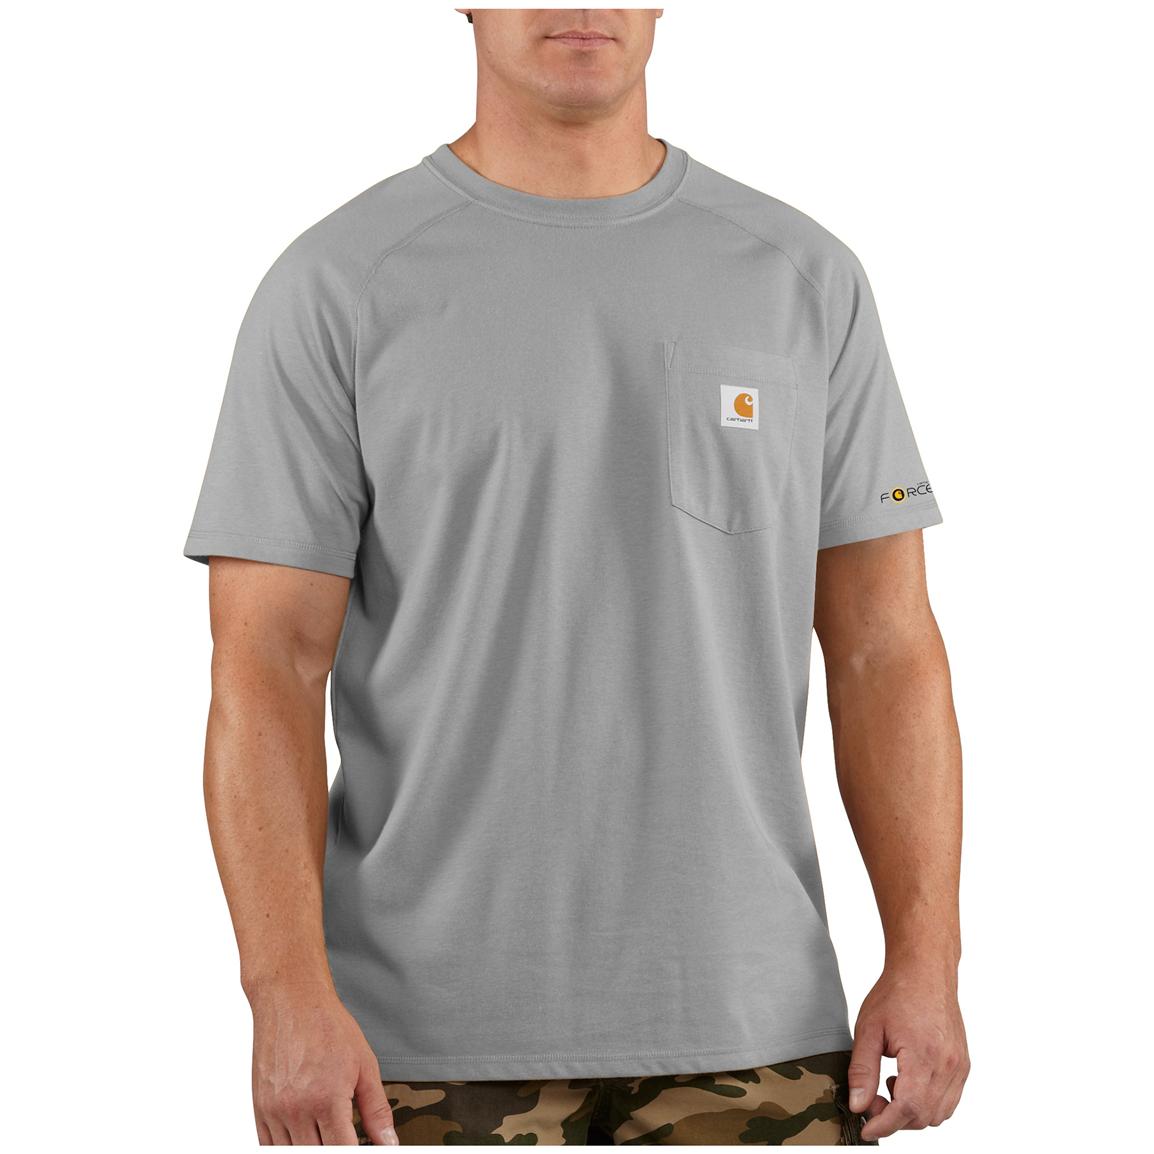 Carhartt Force Cotton Short-sleeved T-shirt - 590859, T-Shirts at ...